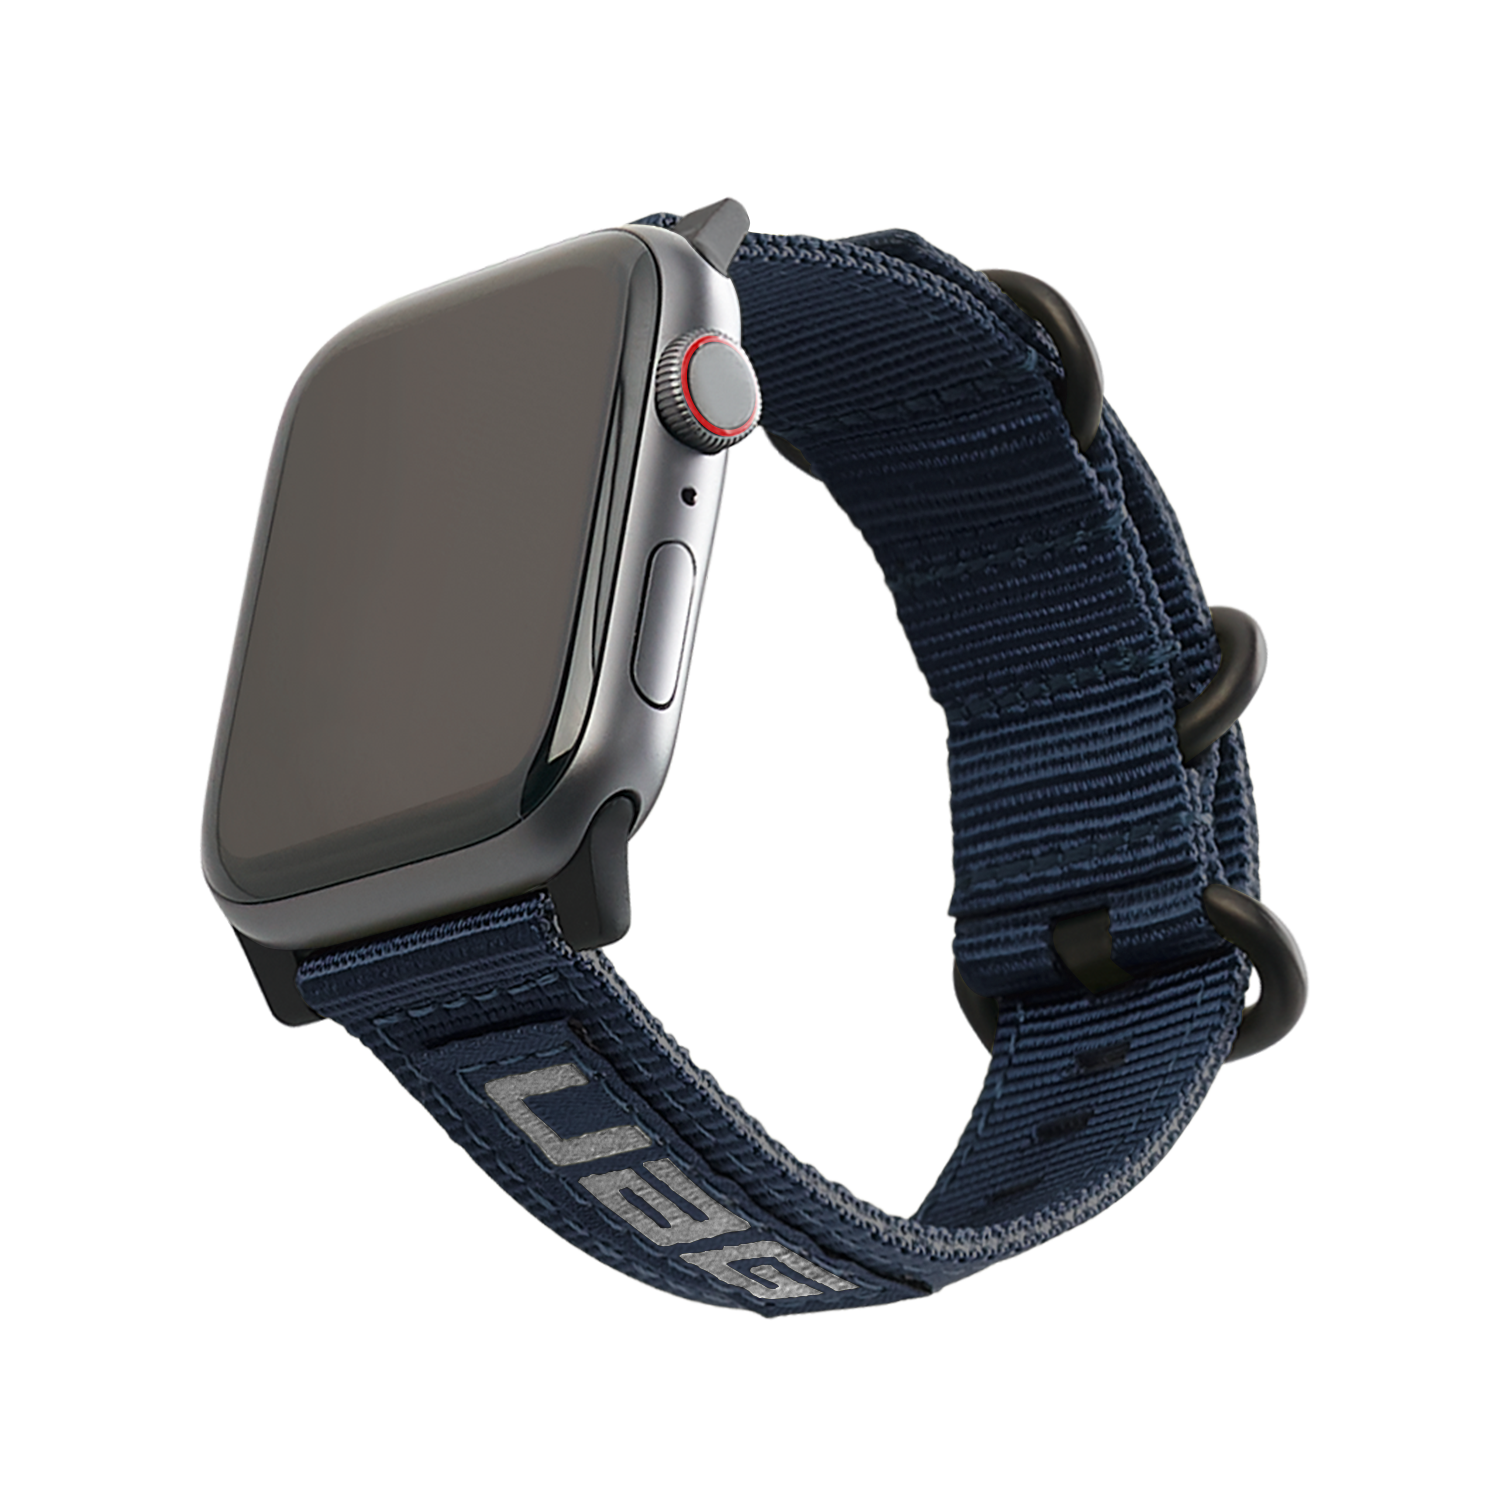 Nato Eco Strap Apple Watch 44mm Mallard